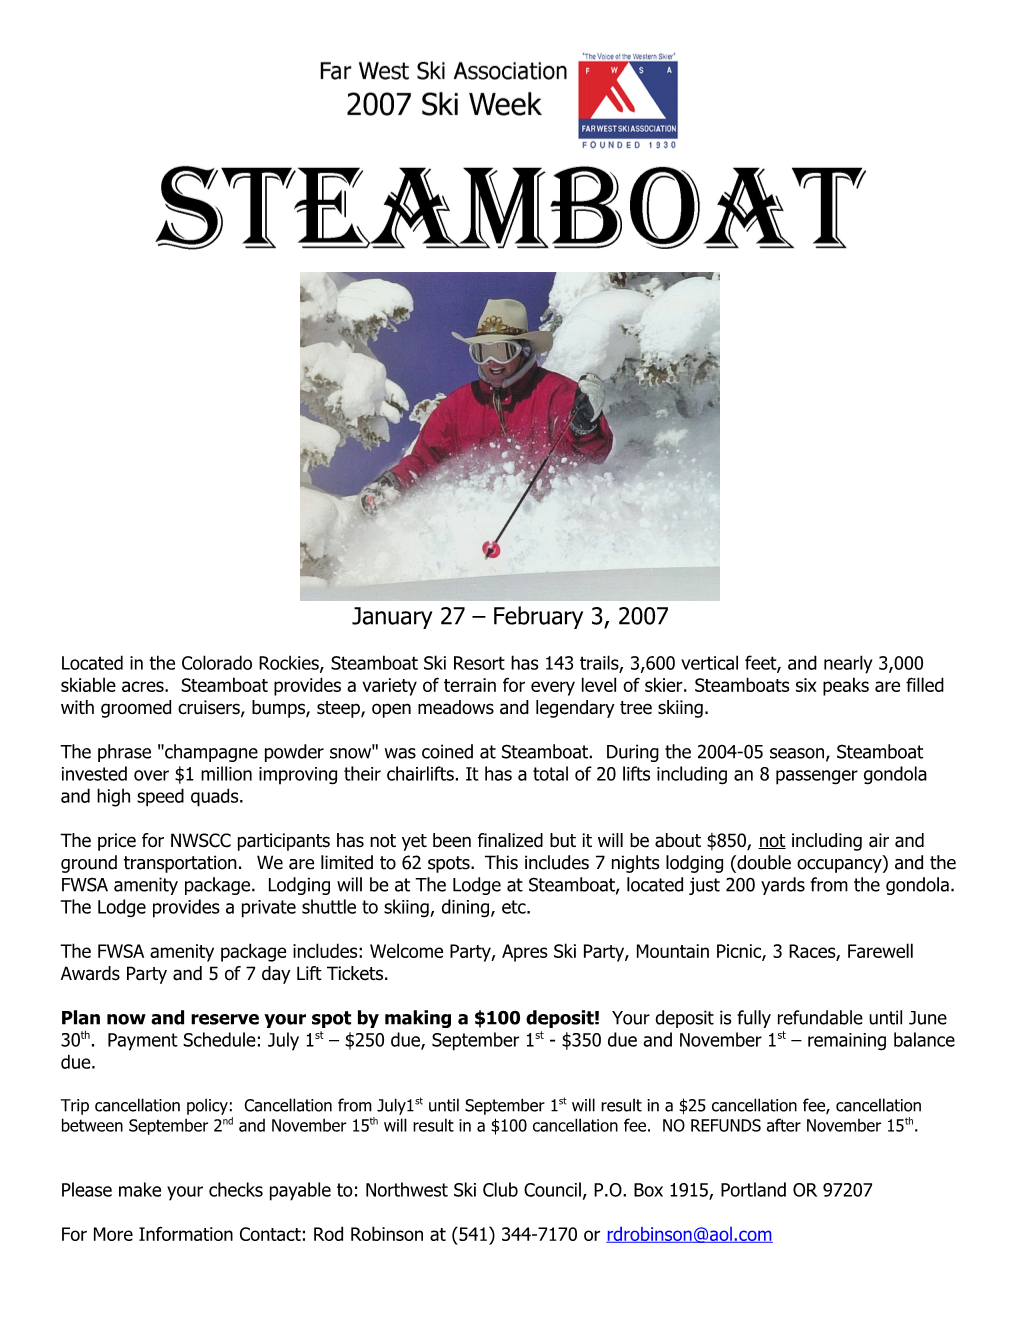 Far West Ski Association Ski Week Steamboat 2006